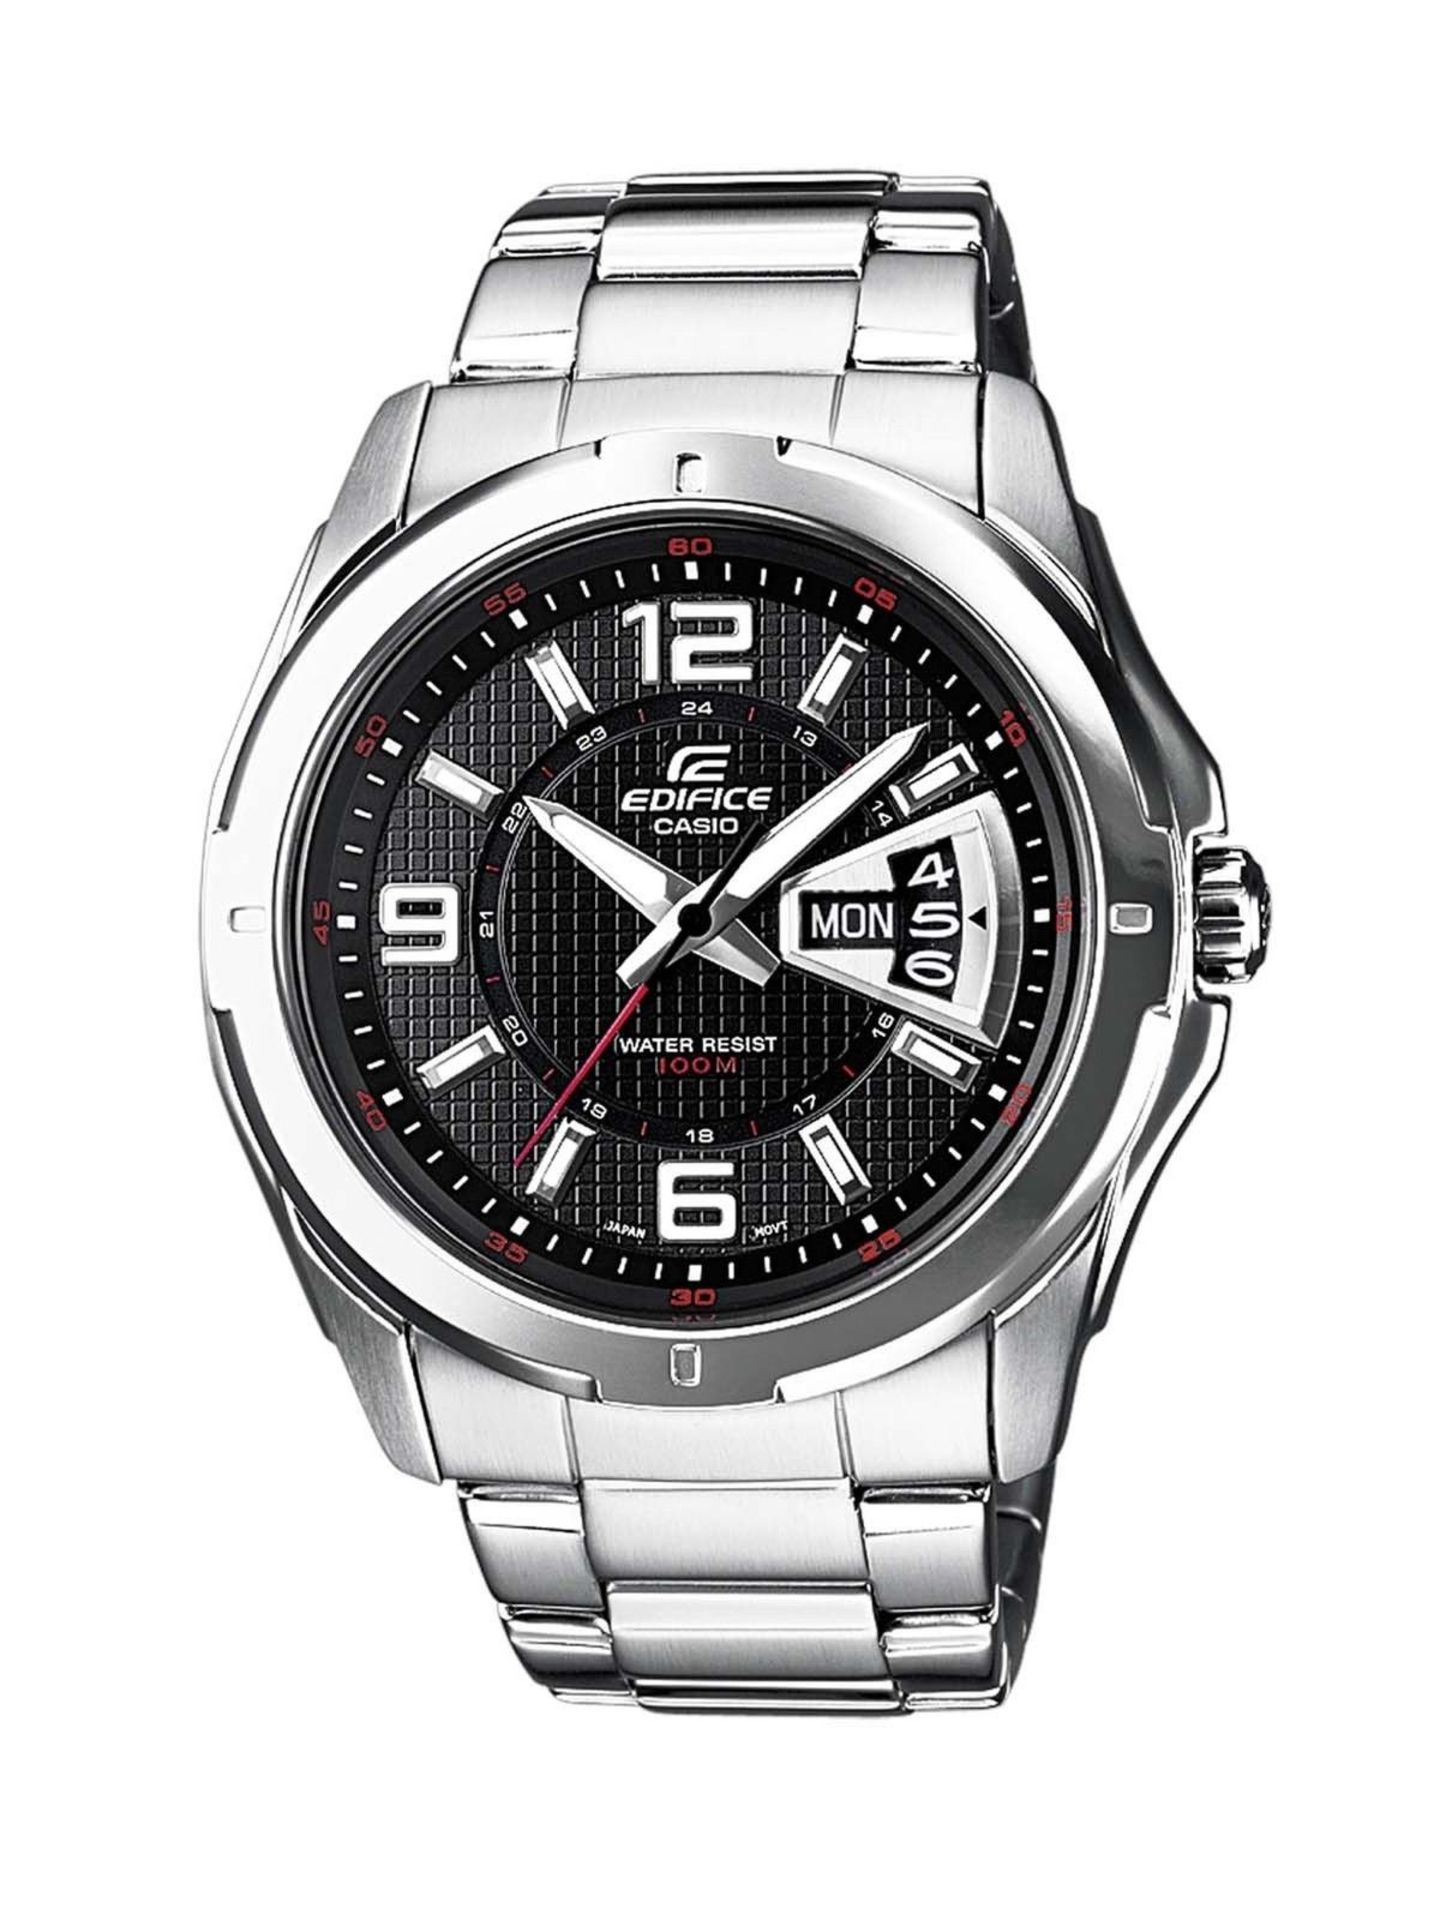 BRAND NEW Casio Edifice Men's Watch EF-129D RRP £129.99